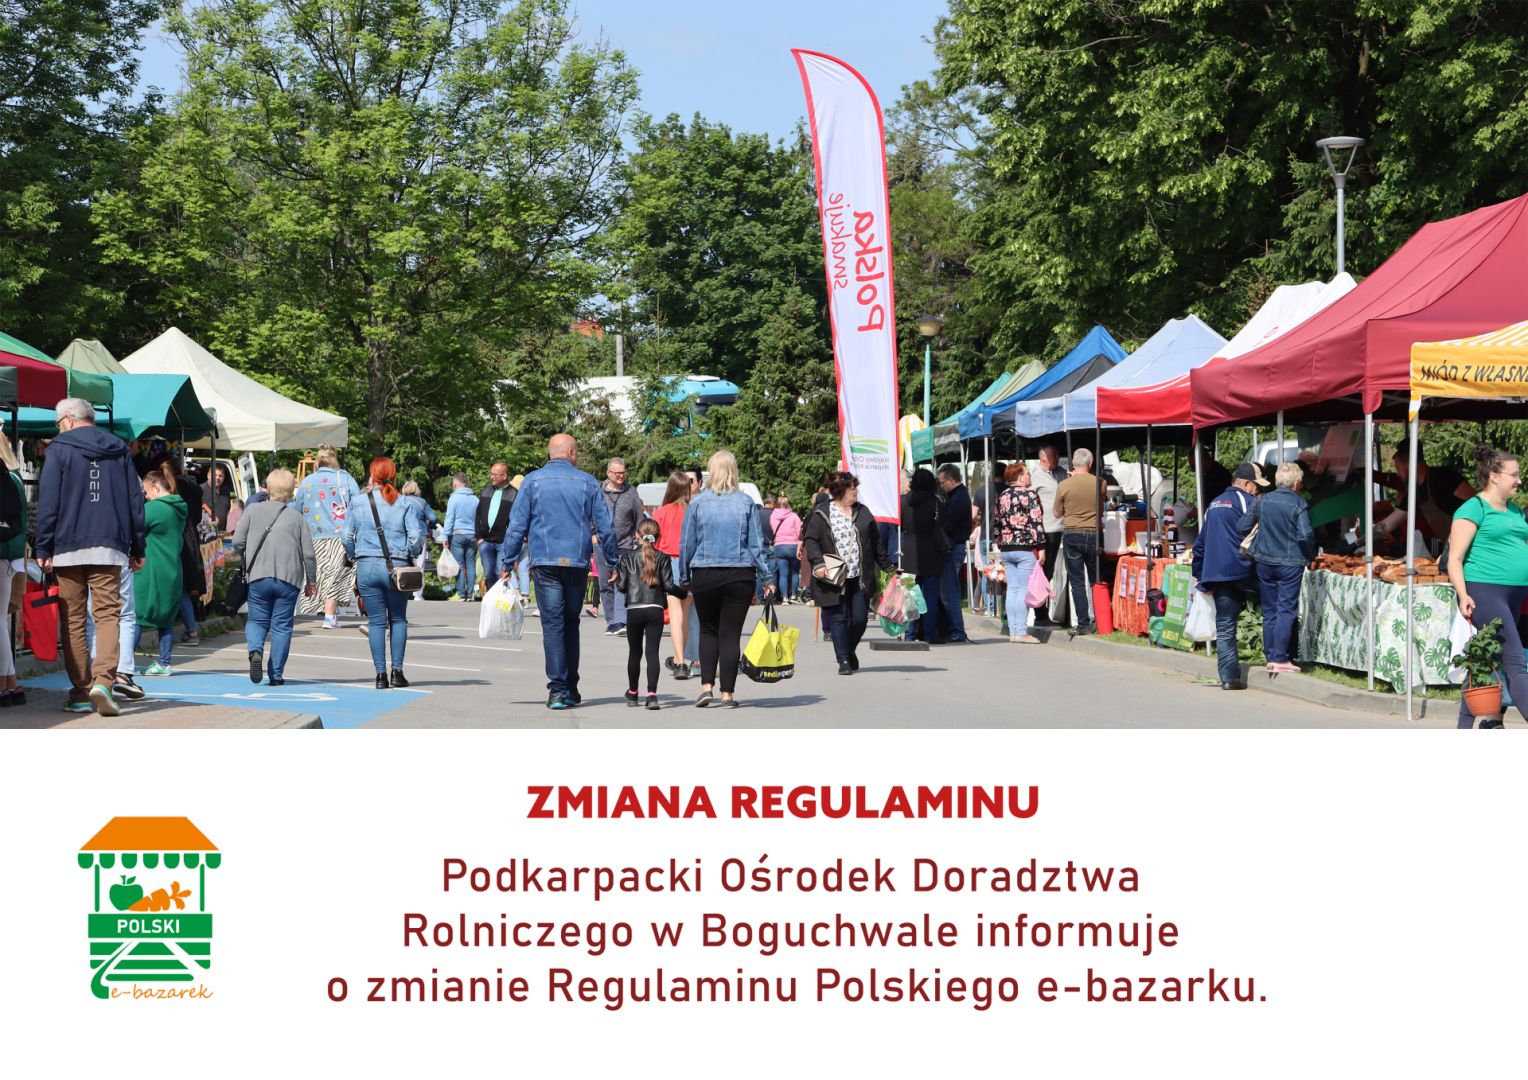 Zmiana regulaminu Polskiego e-bazarku